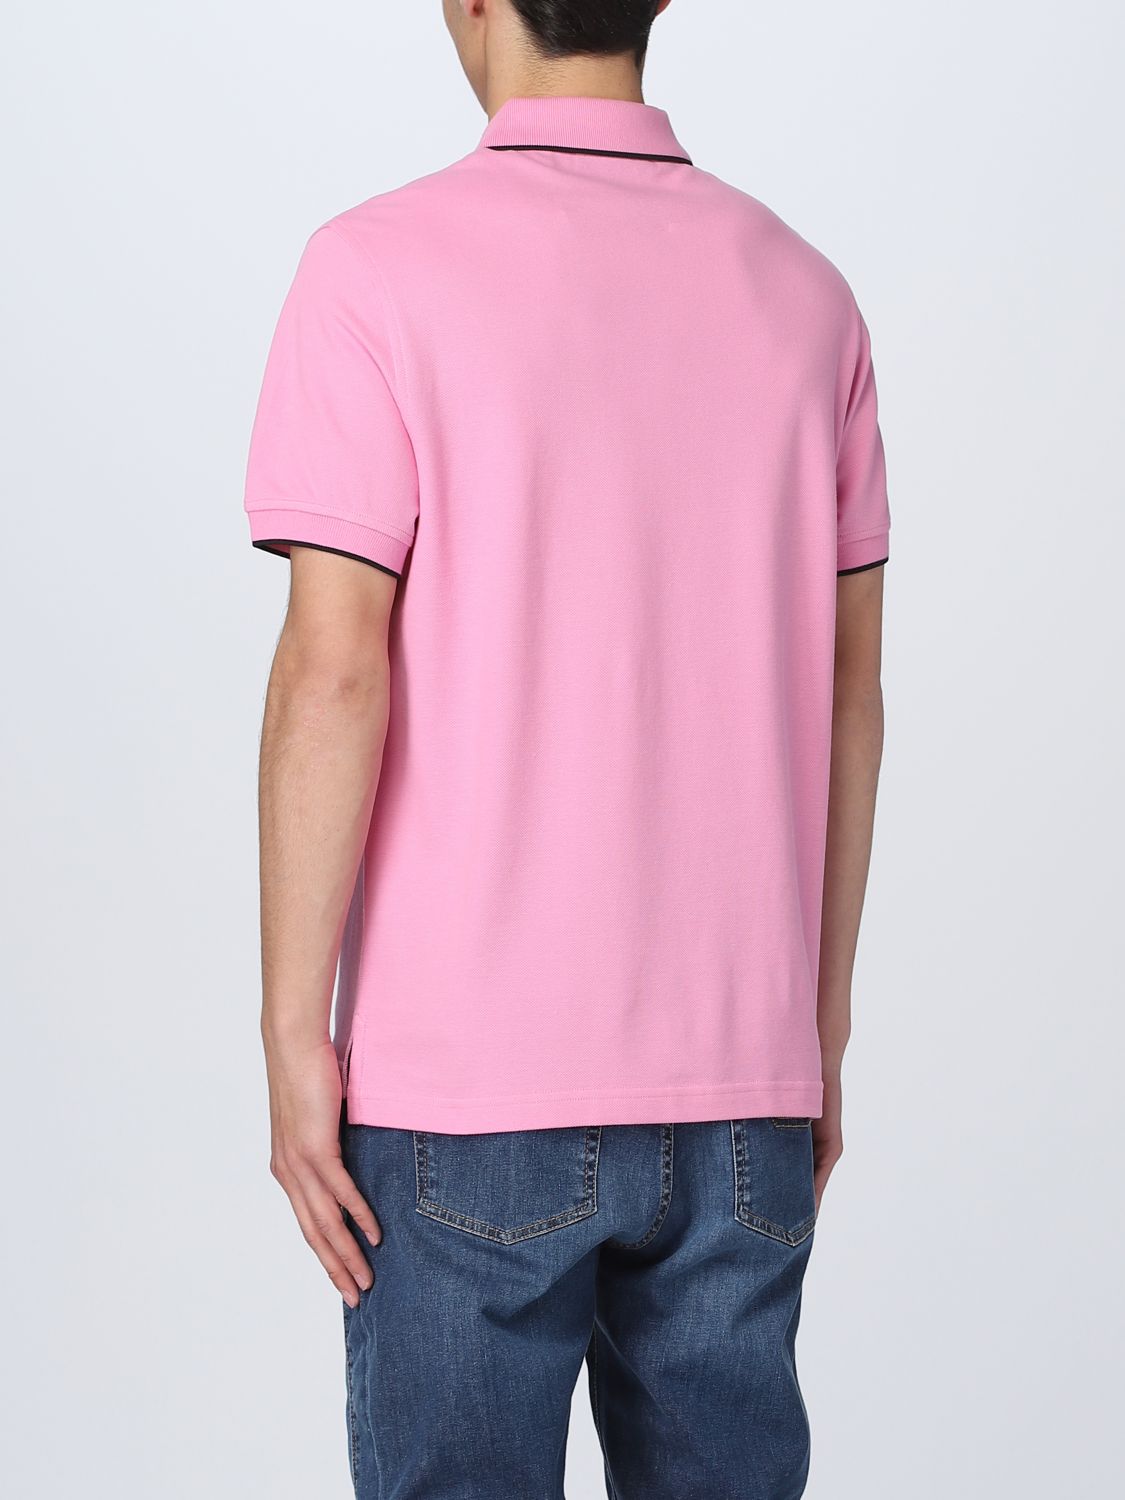 BELSTAFF: shirt for - Pink | Belstaff polo shirt 104291 online on GIGLIO.COM